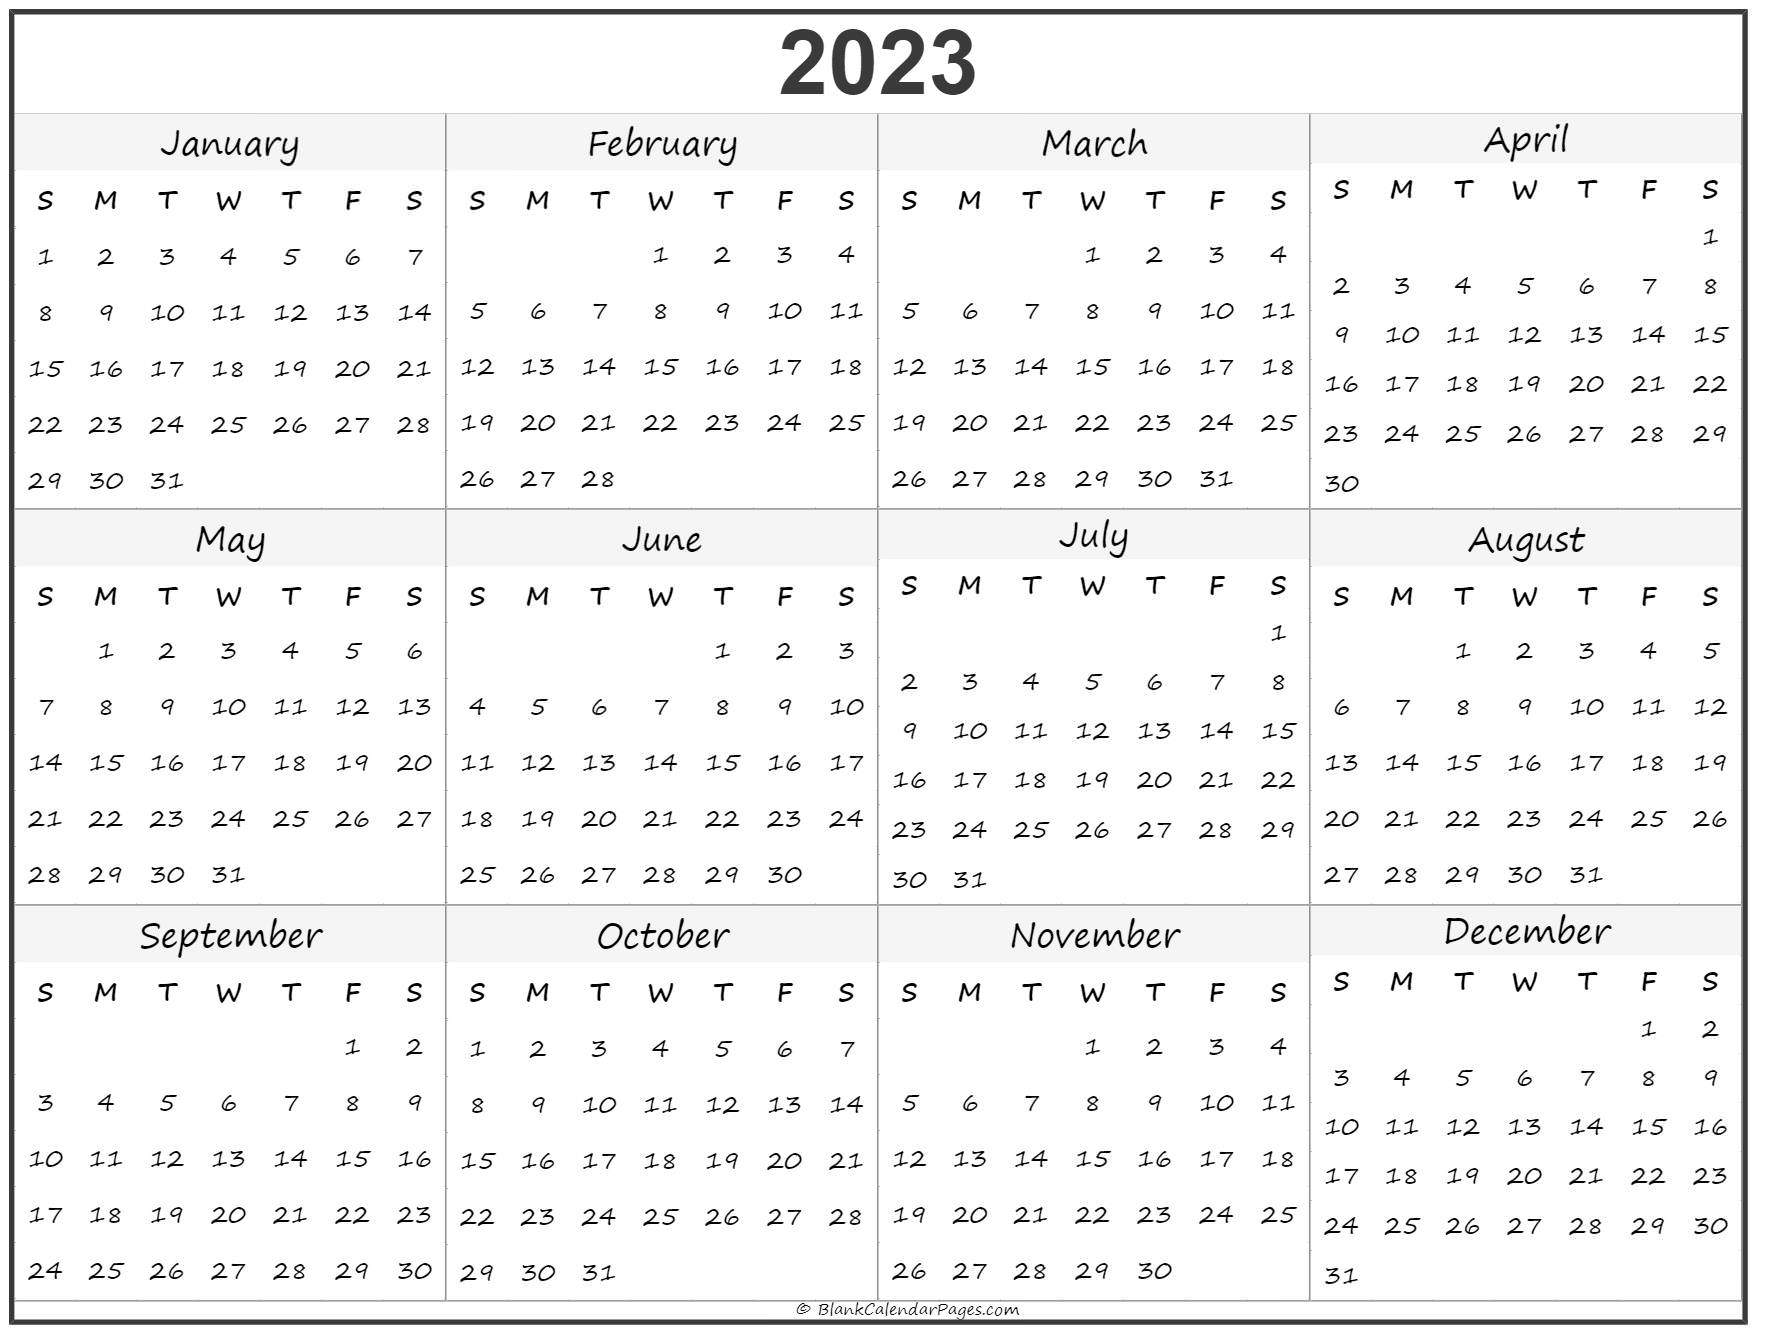 2023 yearly calendar - 2023 calendar templates and images - Carmine Wheeler